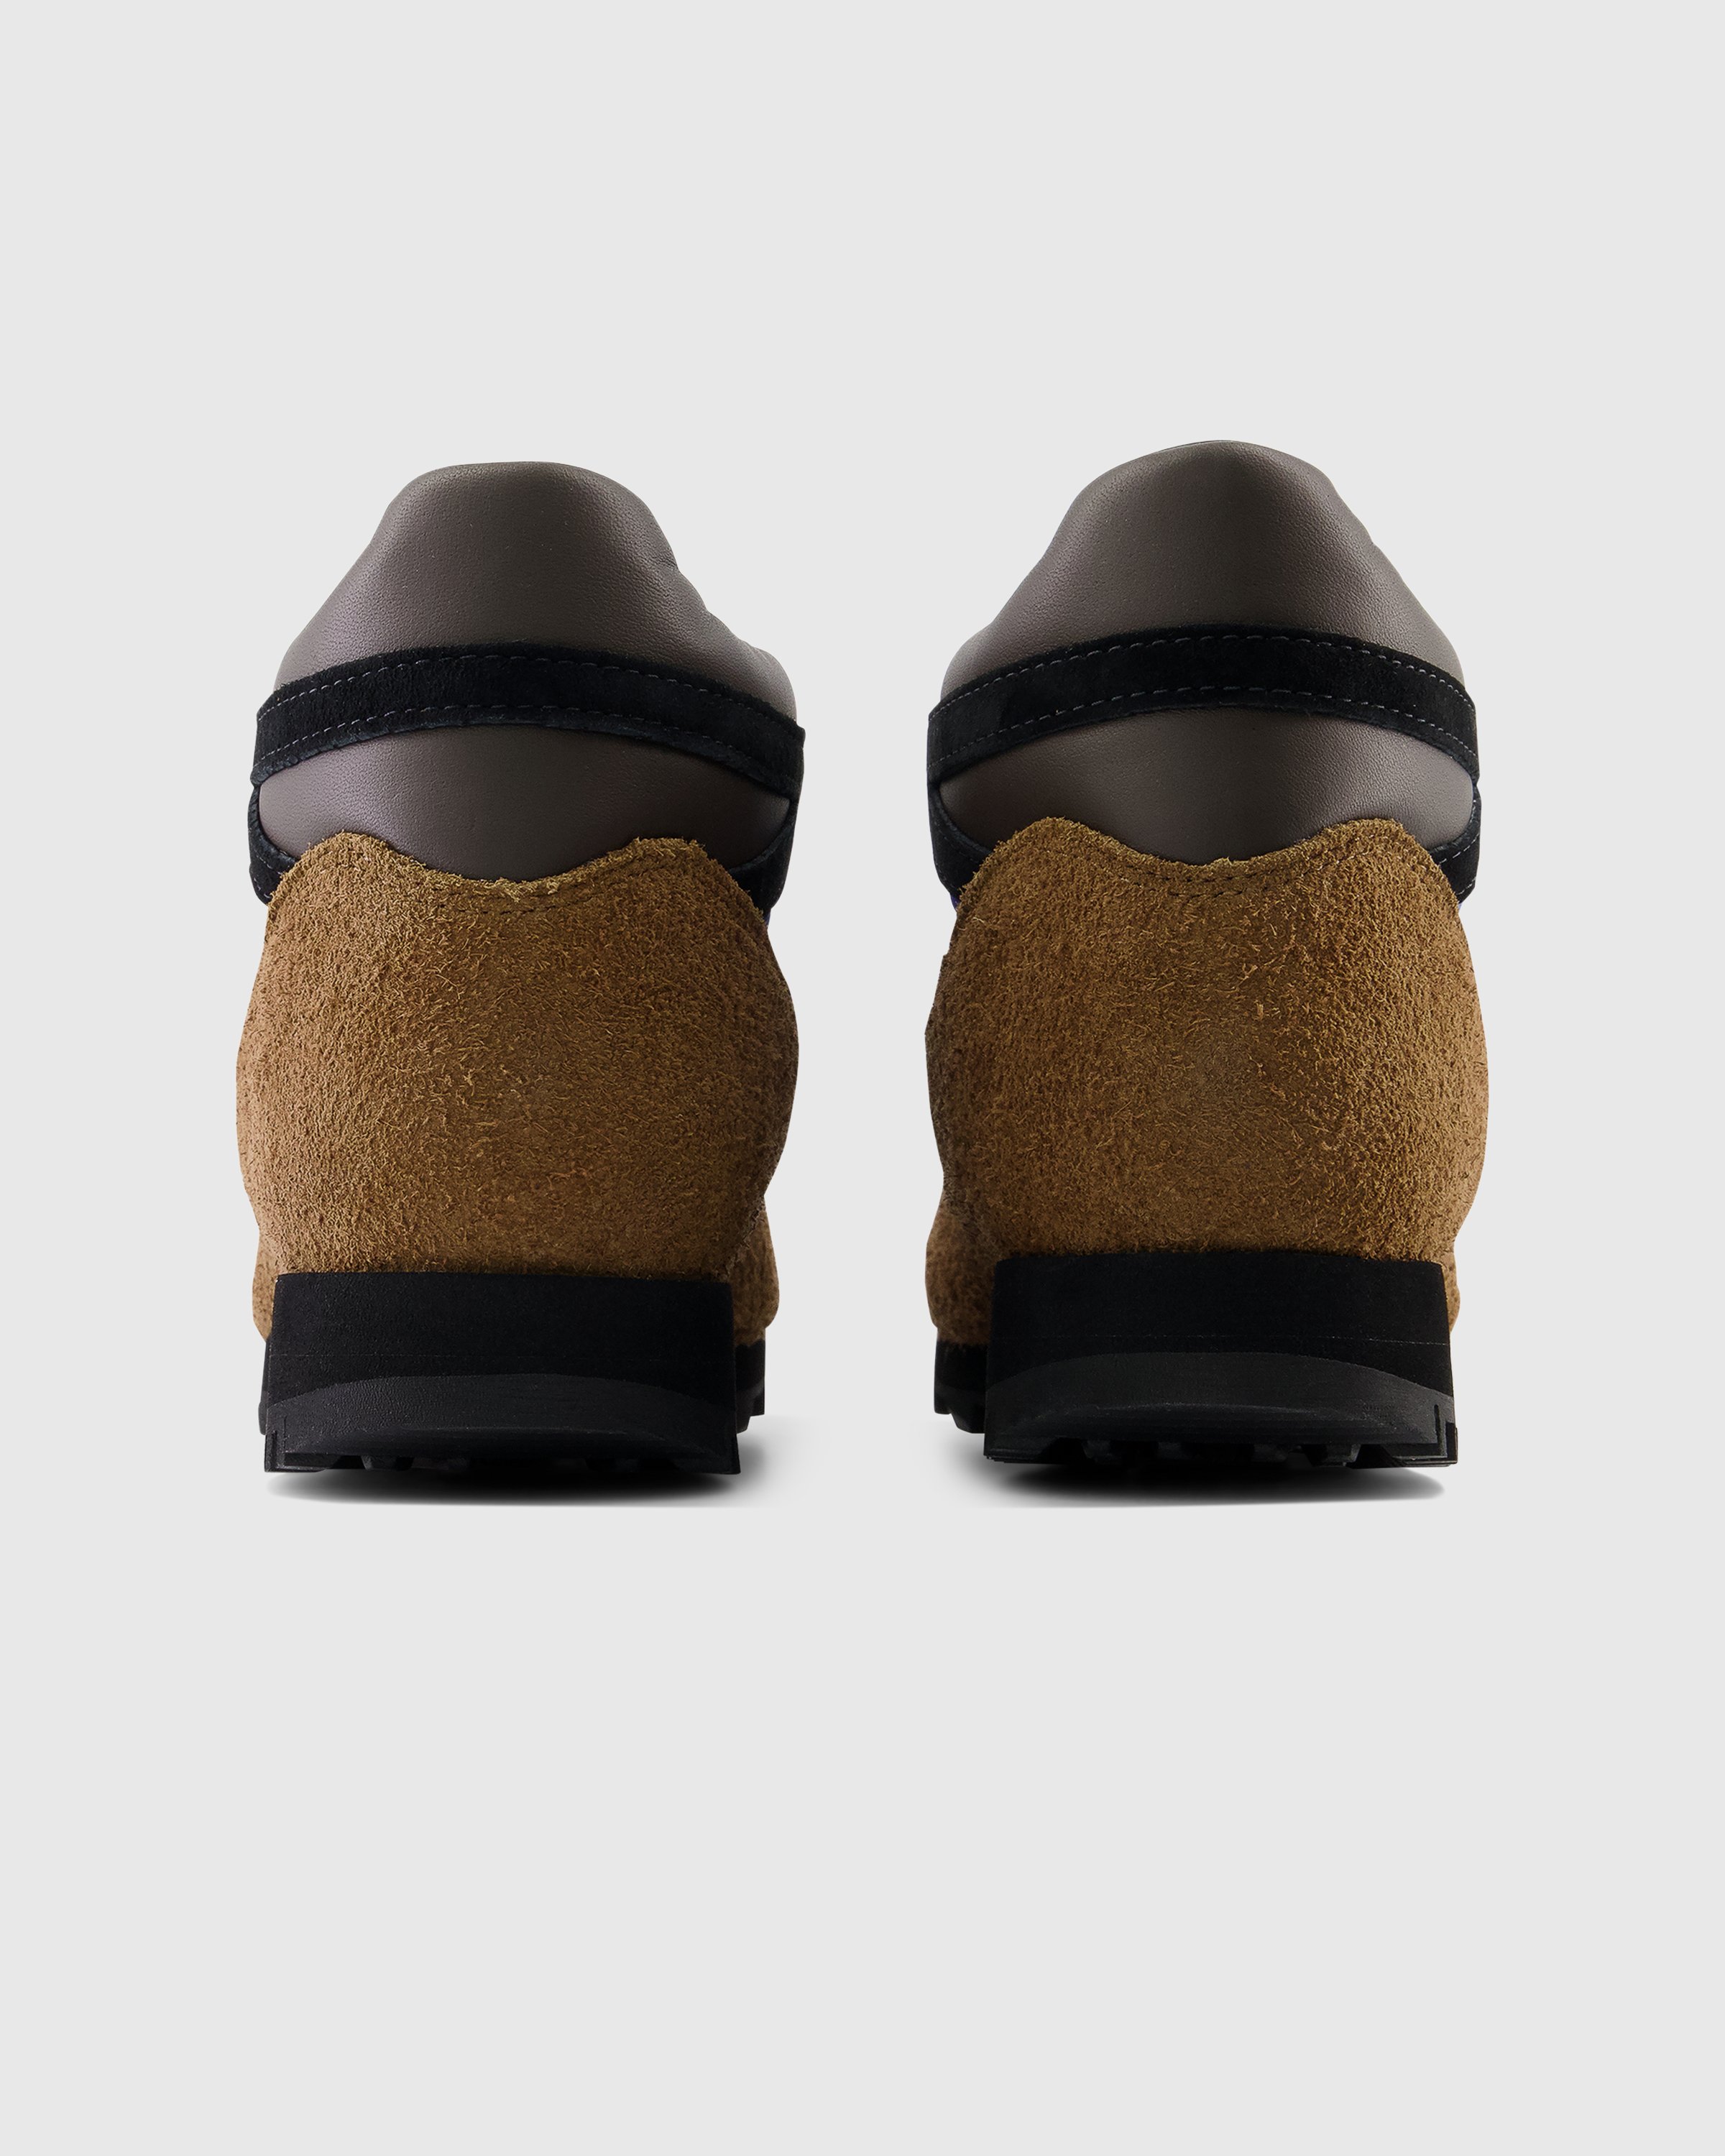 New Balance - URAINMI Rainier Dark Earth - Footwear - Brown - Image 4